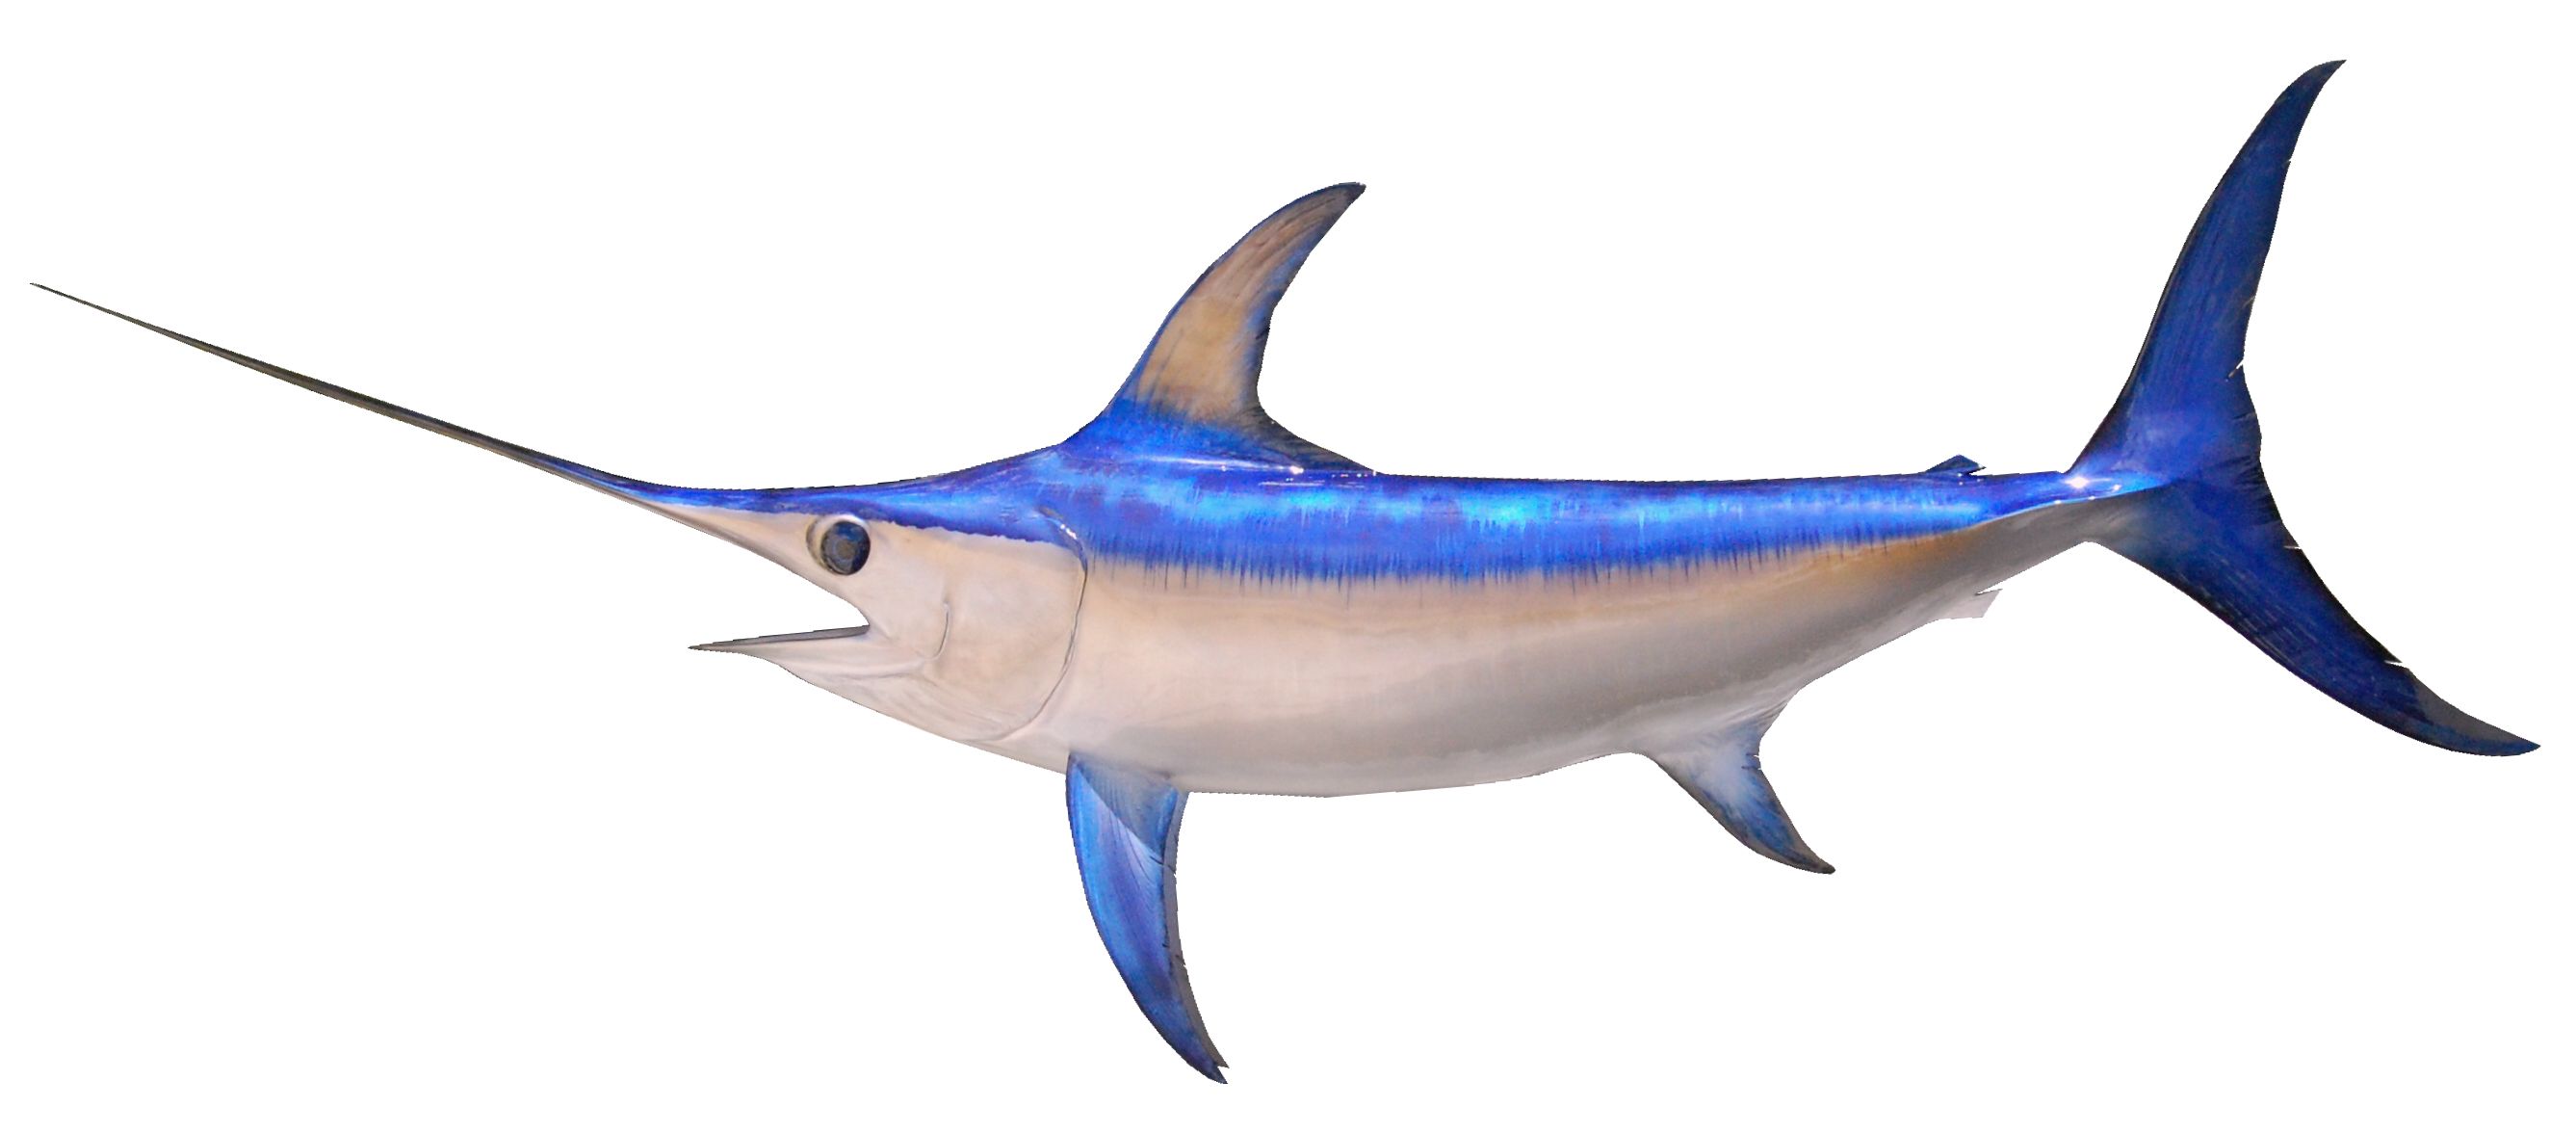 15-swordfish-facts-for-kids